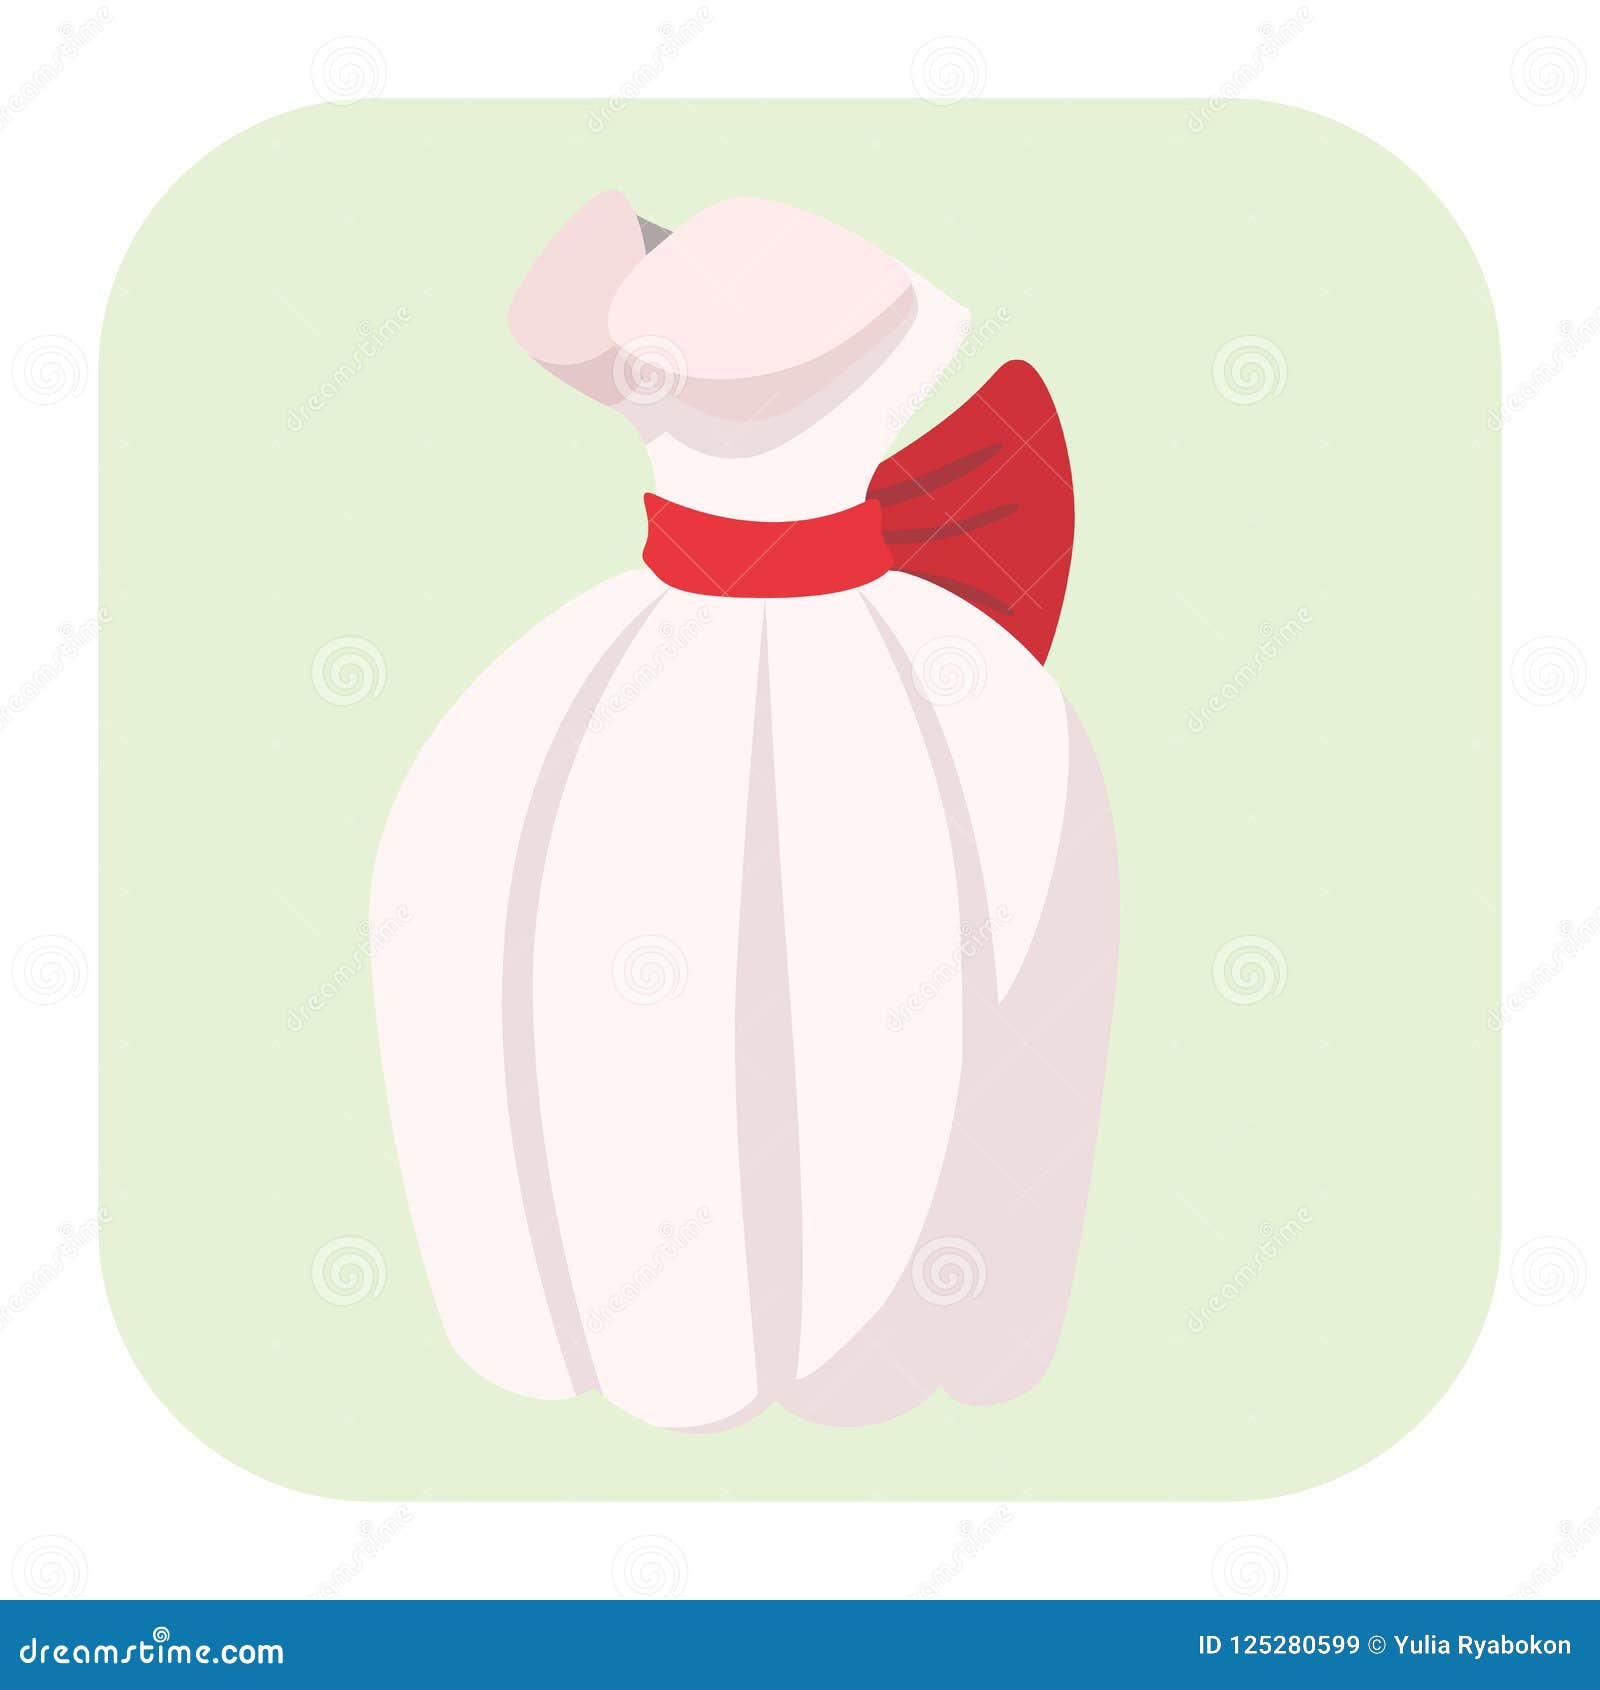 Wedding dress cartoon icon stock illustration. Illustration of fashion